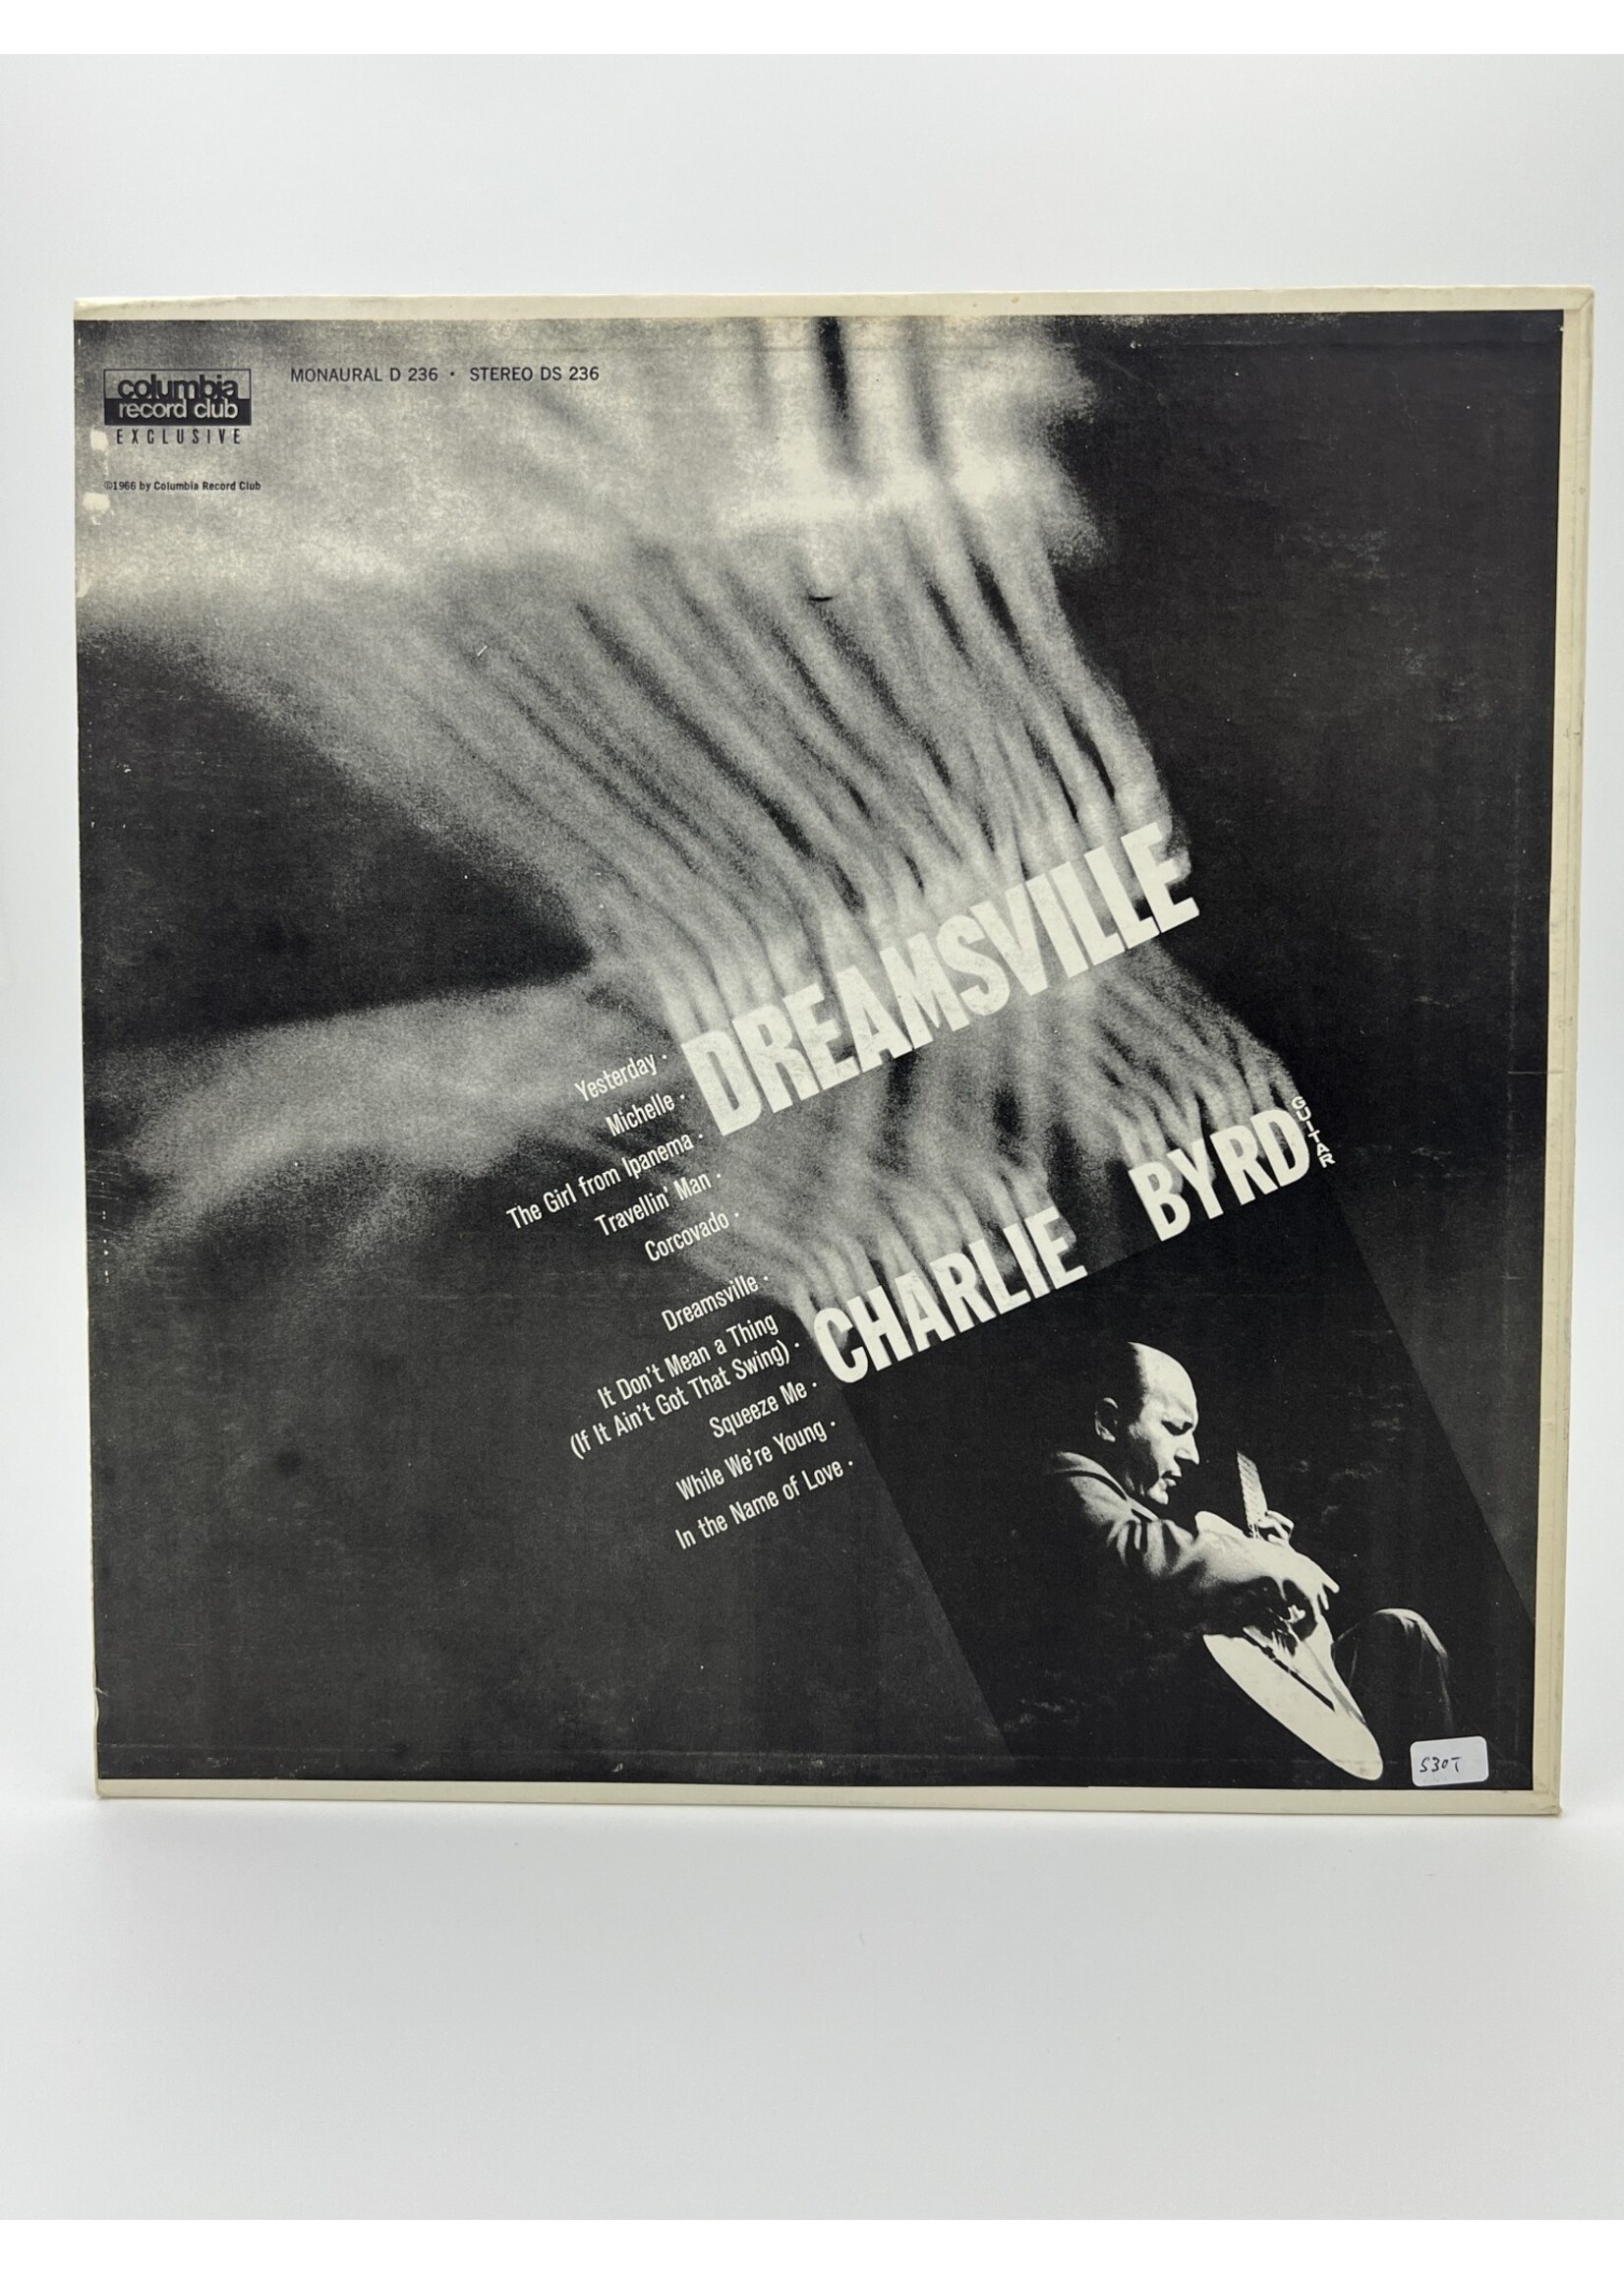 LP   Charlie Byrd Dreamsville LP Record